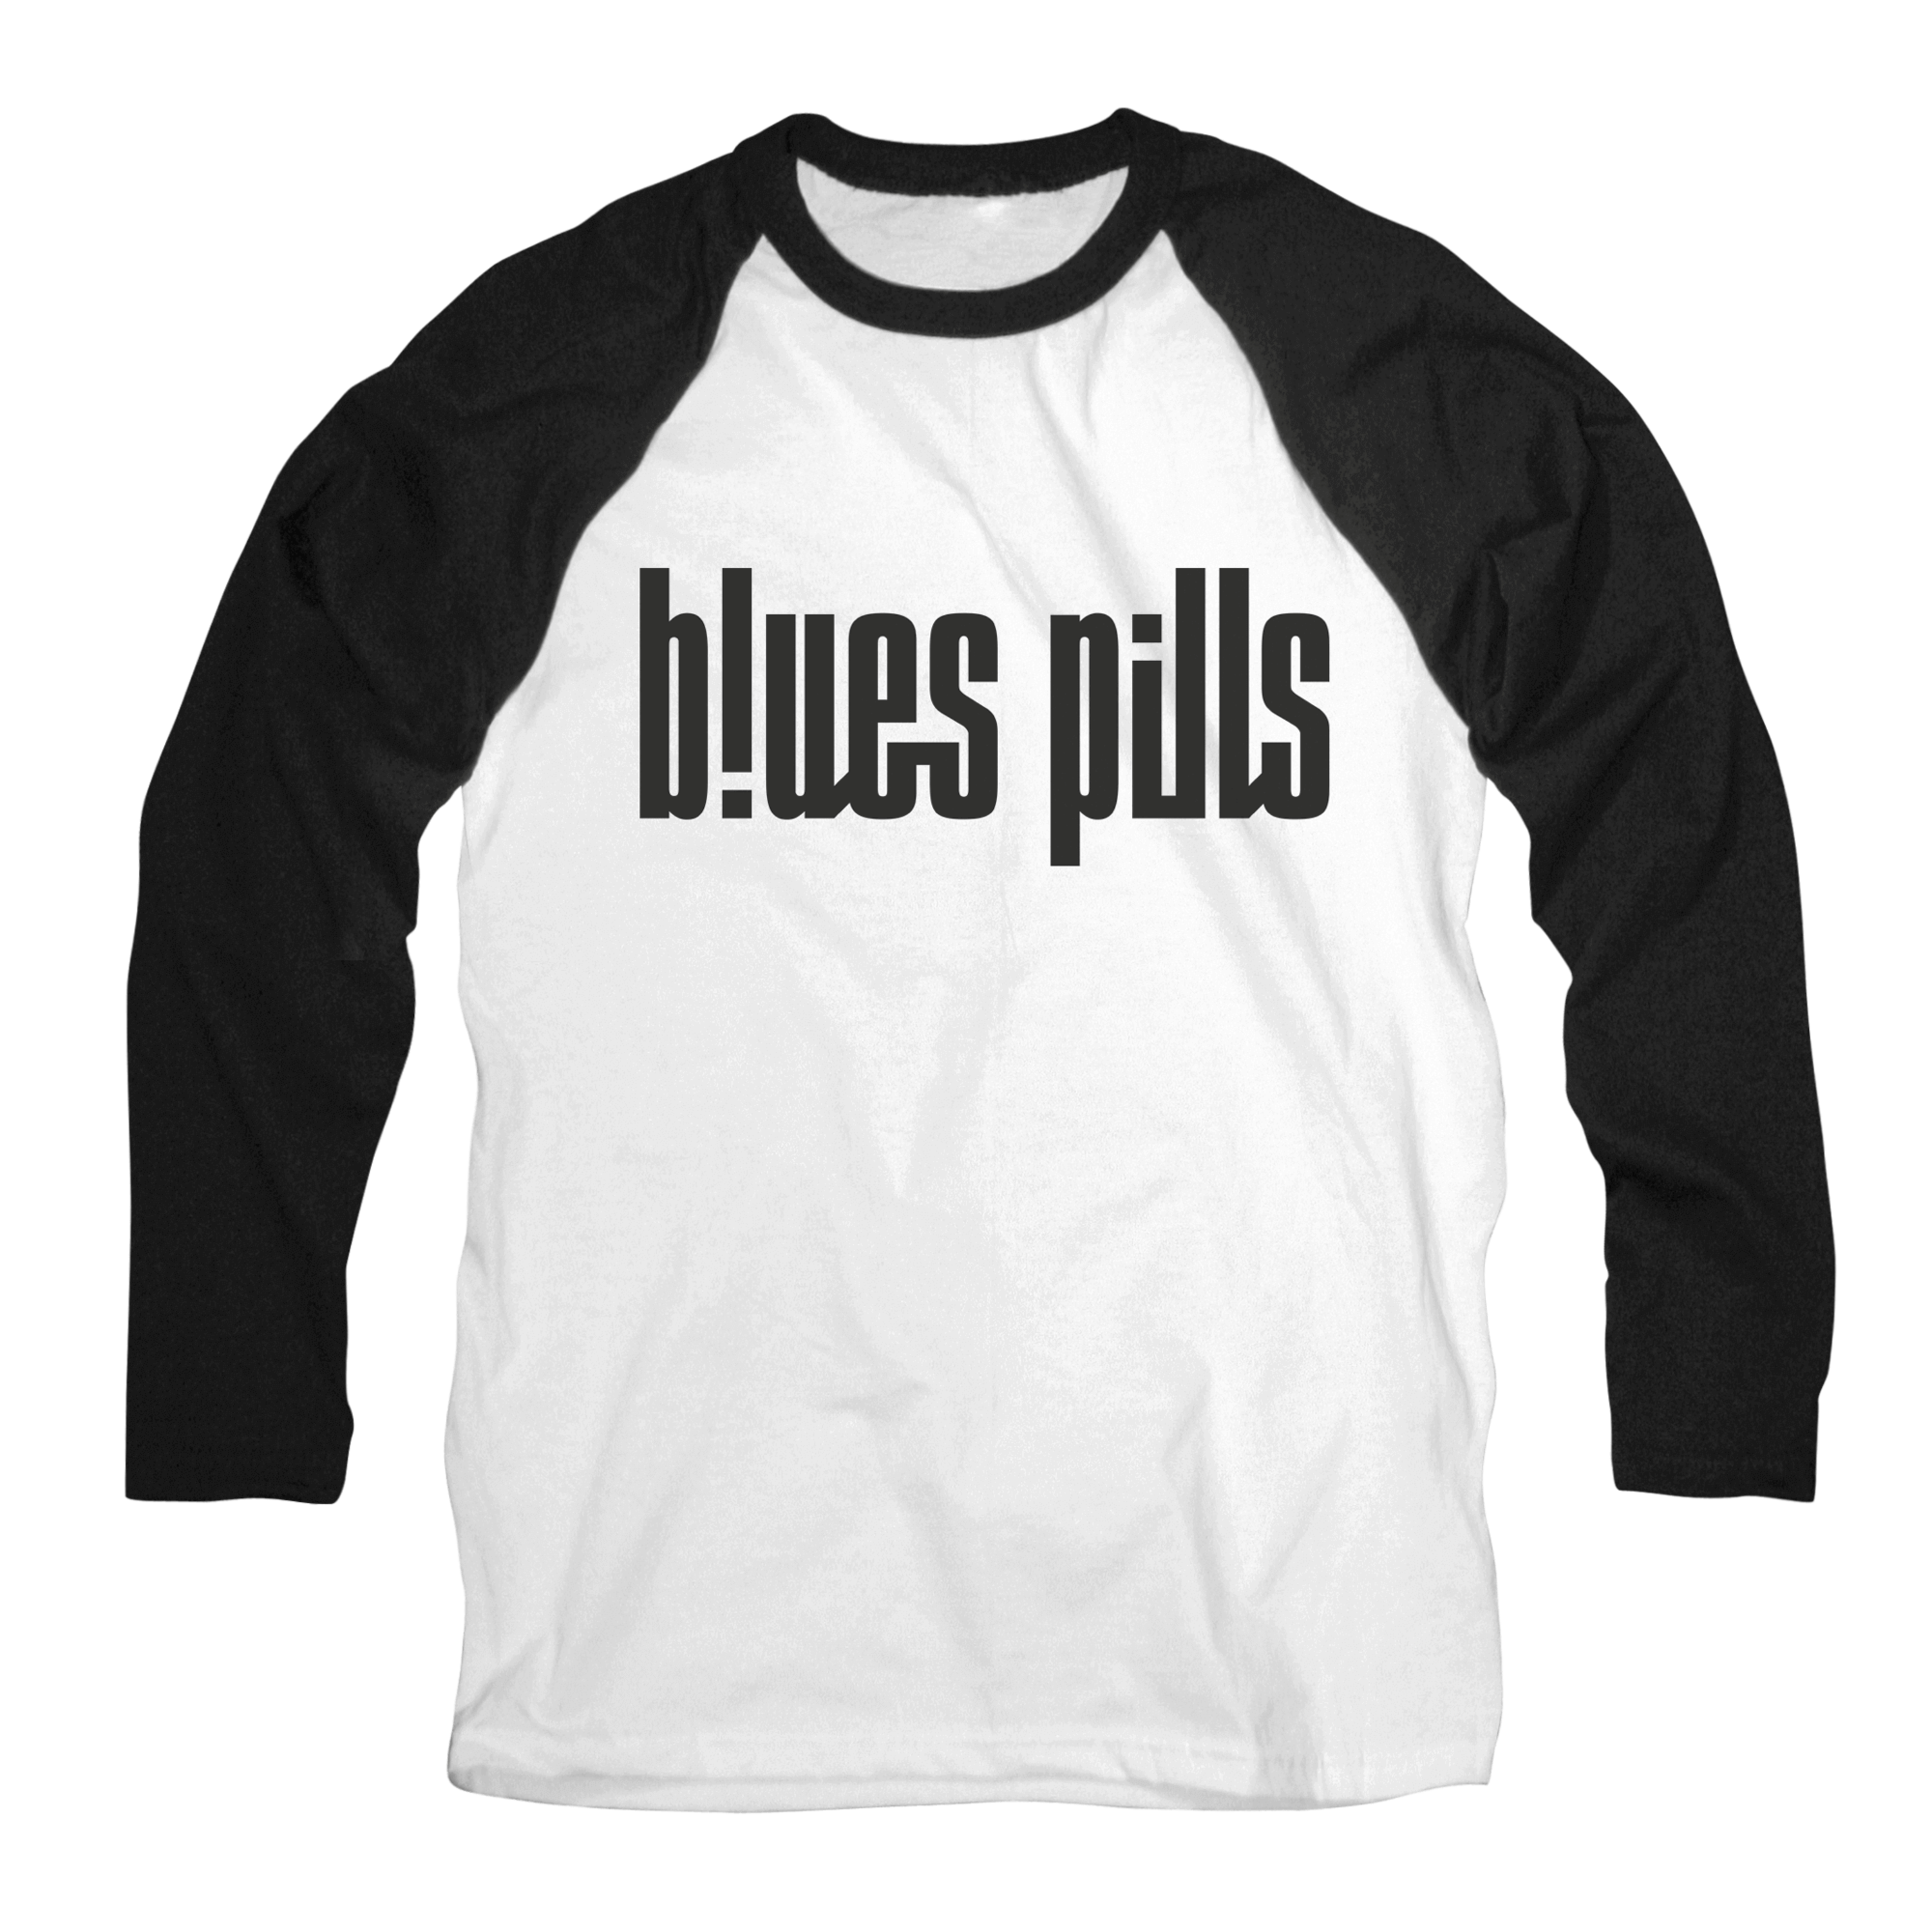 https://images.bravado.de/prod/product-assets/product-asset-data/blues-pills/blues-pills/products/132647/web/21902/image-thumb__21902__3000x3000_original/Blues-Pills-Logo-Longsleeves-weiss-132647-21902.png